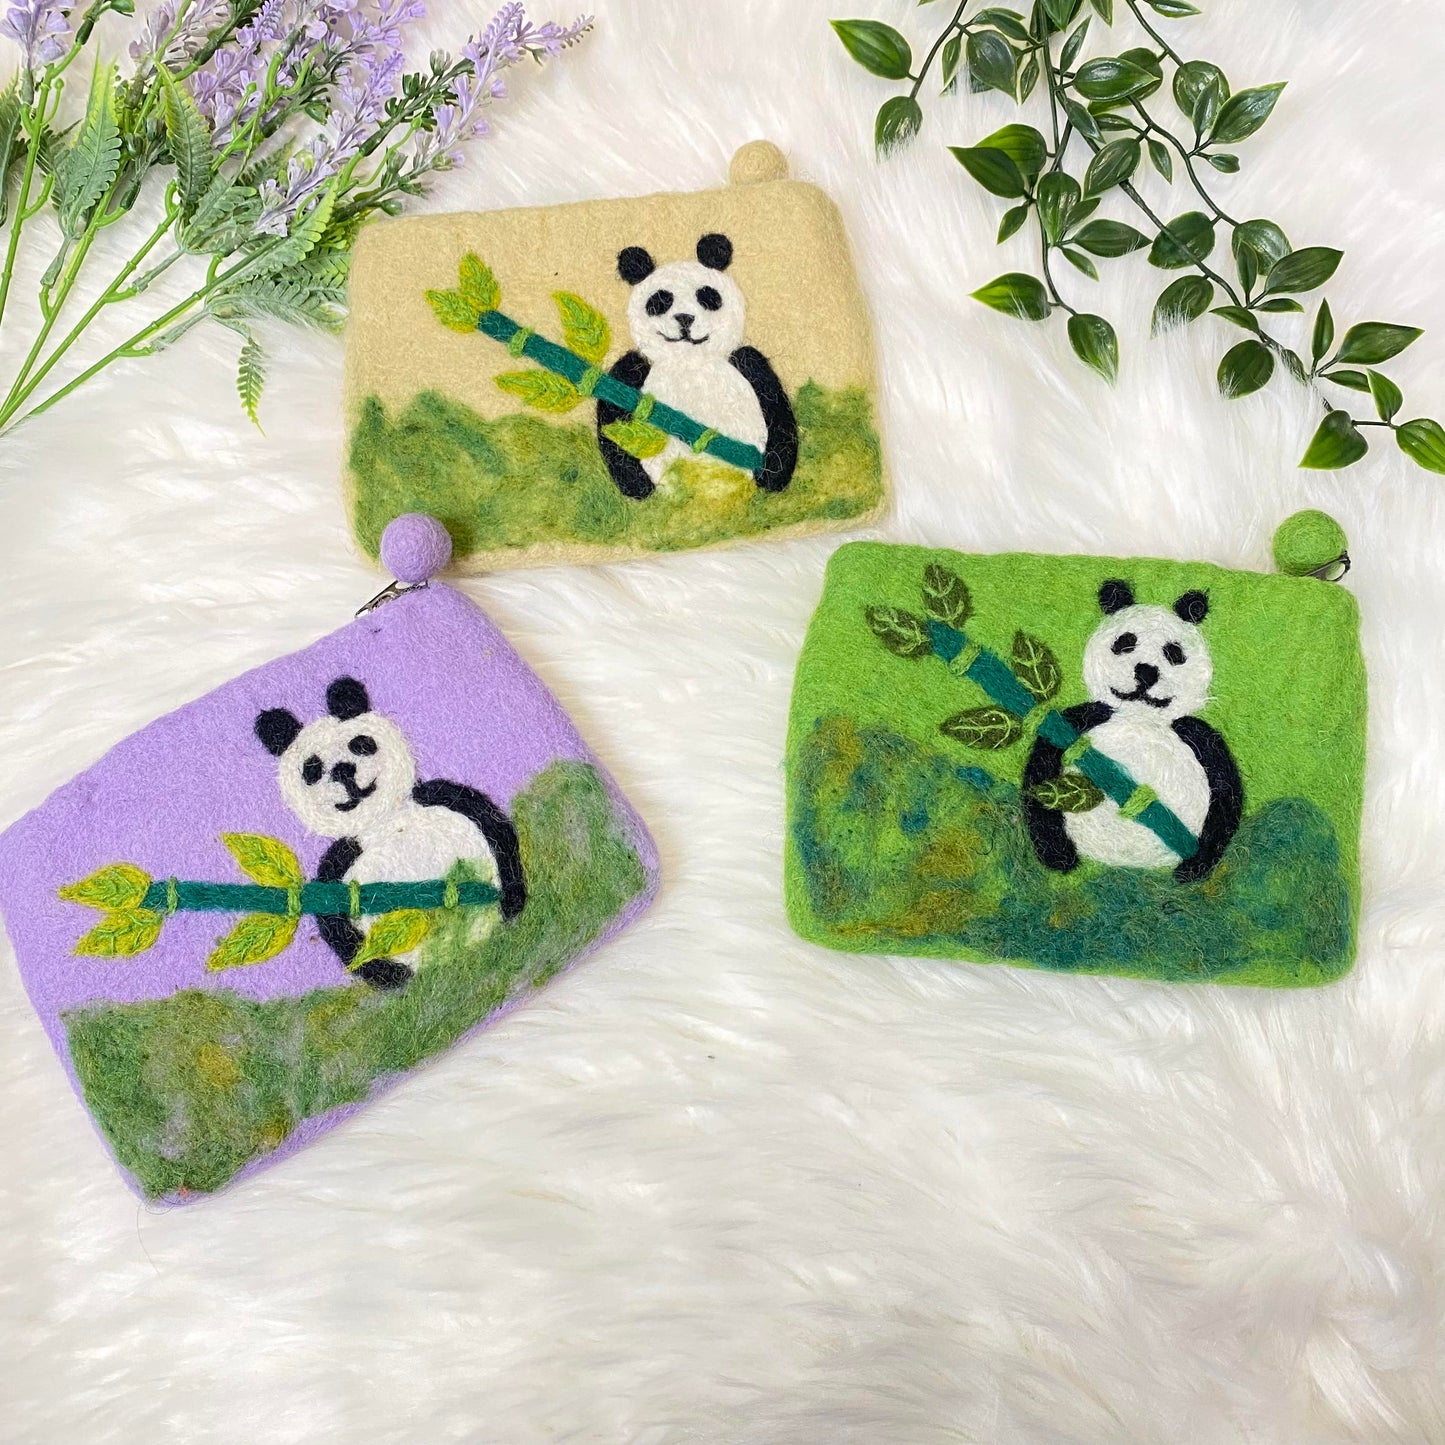 Handmade Embroidered Panda Theme Purse